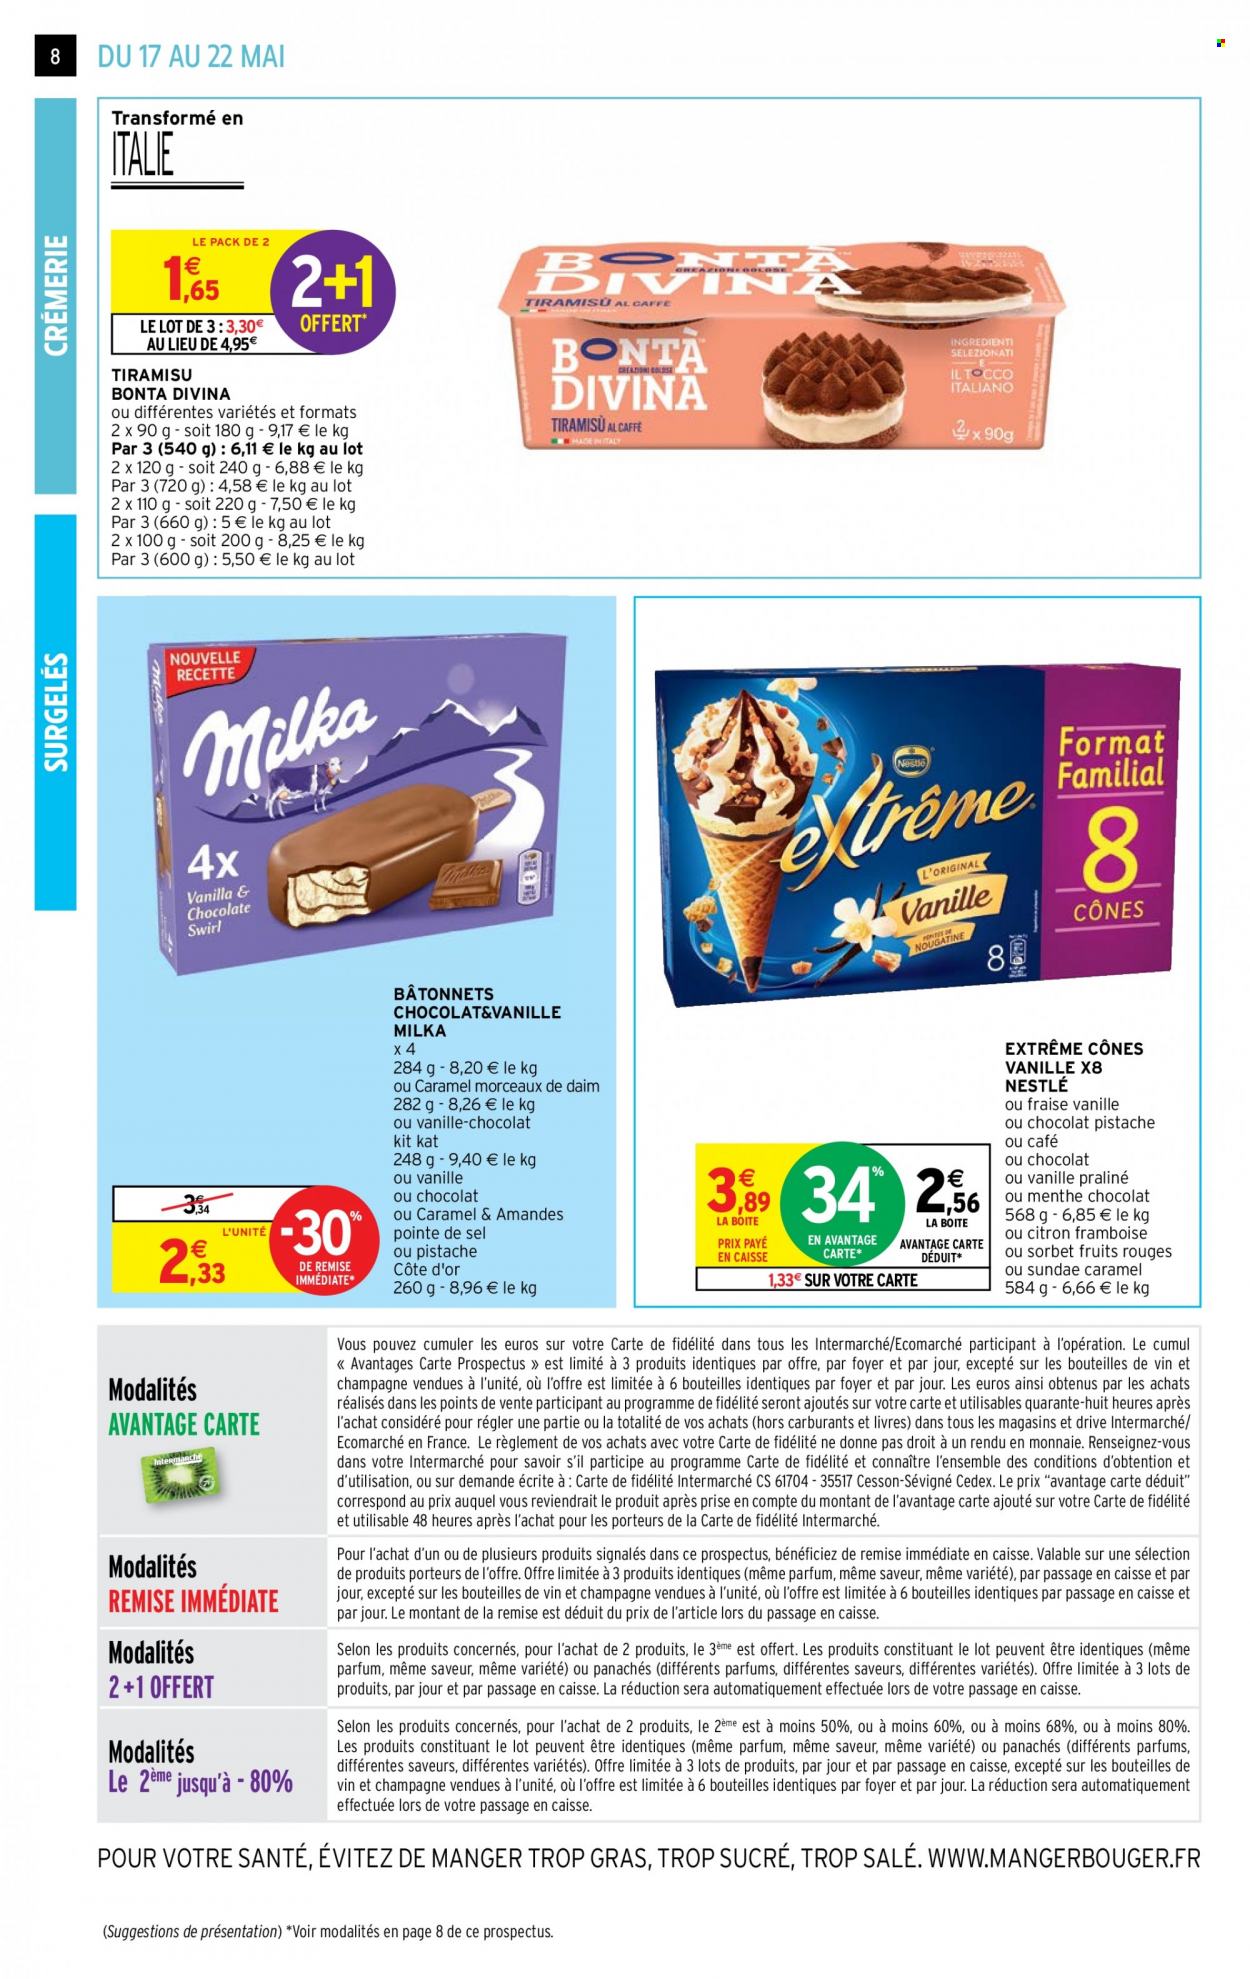 thumbnail - Catalogue Intermarché Express - 17/05/2022 - 22/05/2022 - Produits soldés - alcool, Nestlé, Milka, tiramisu, pralinés, Daim, Côte d'Or, KitKat, menthe, champagne. Page 8.